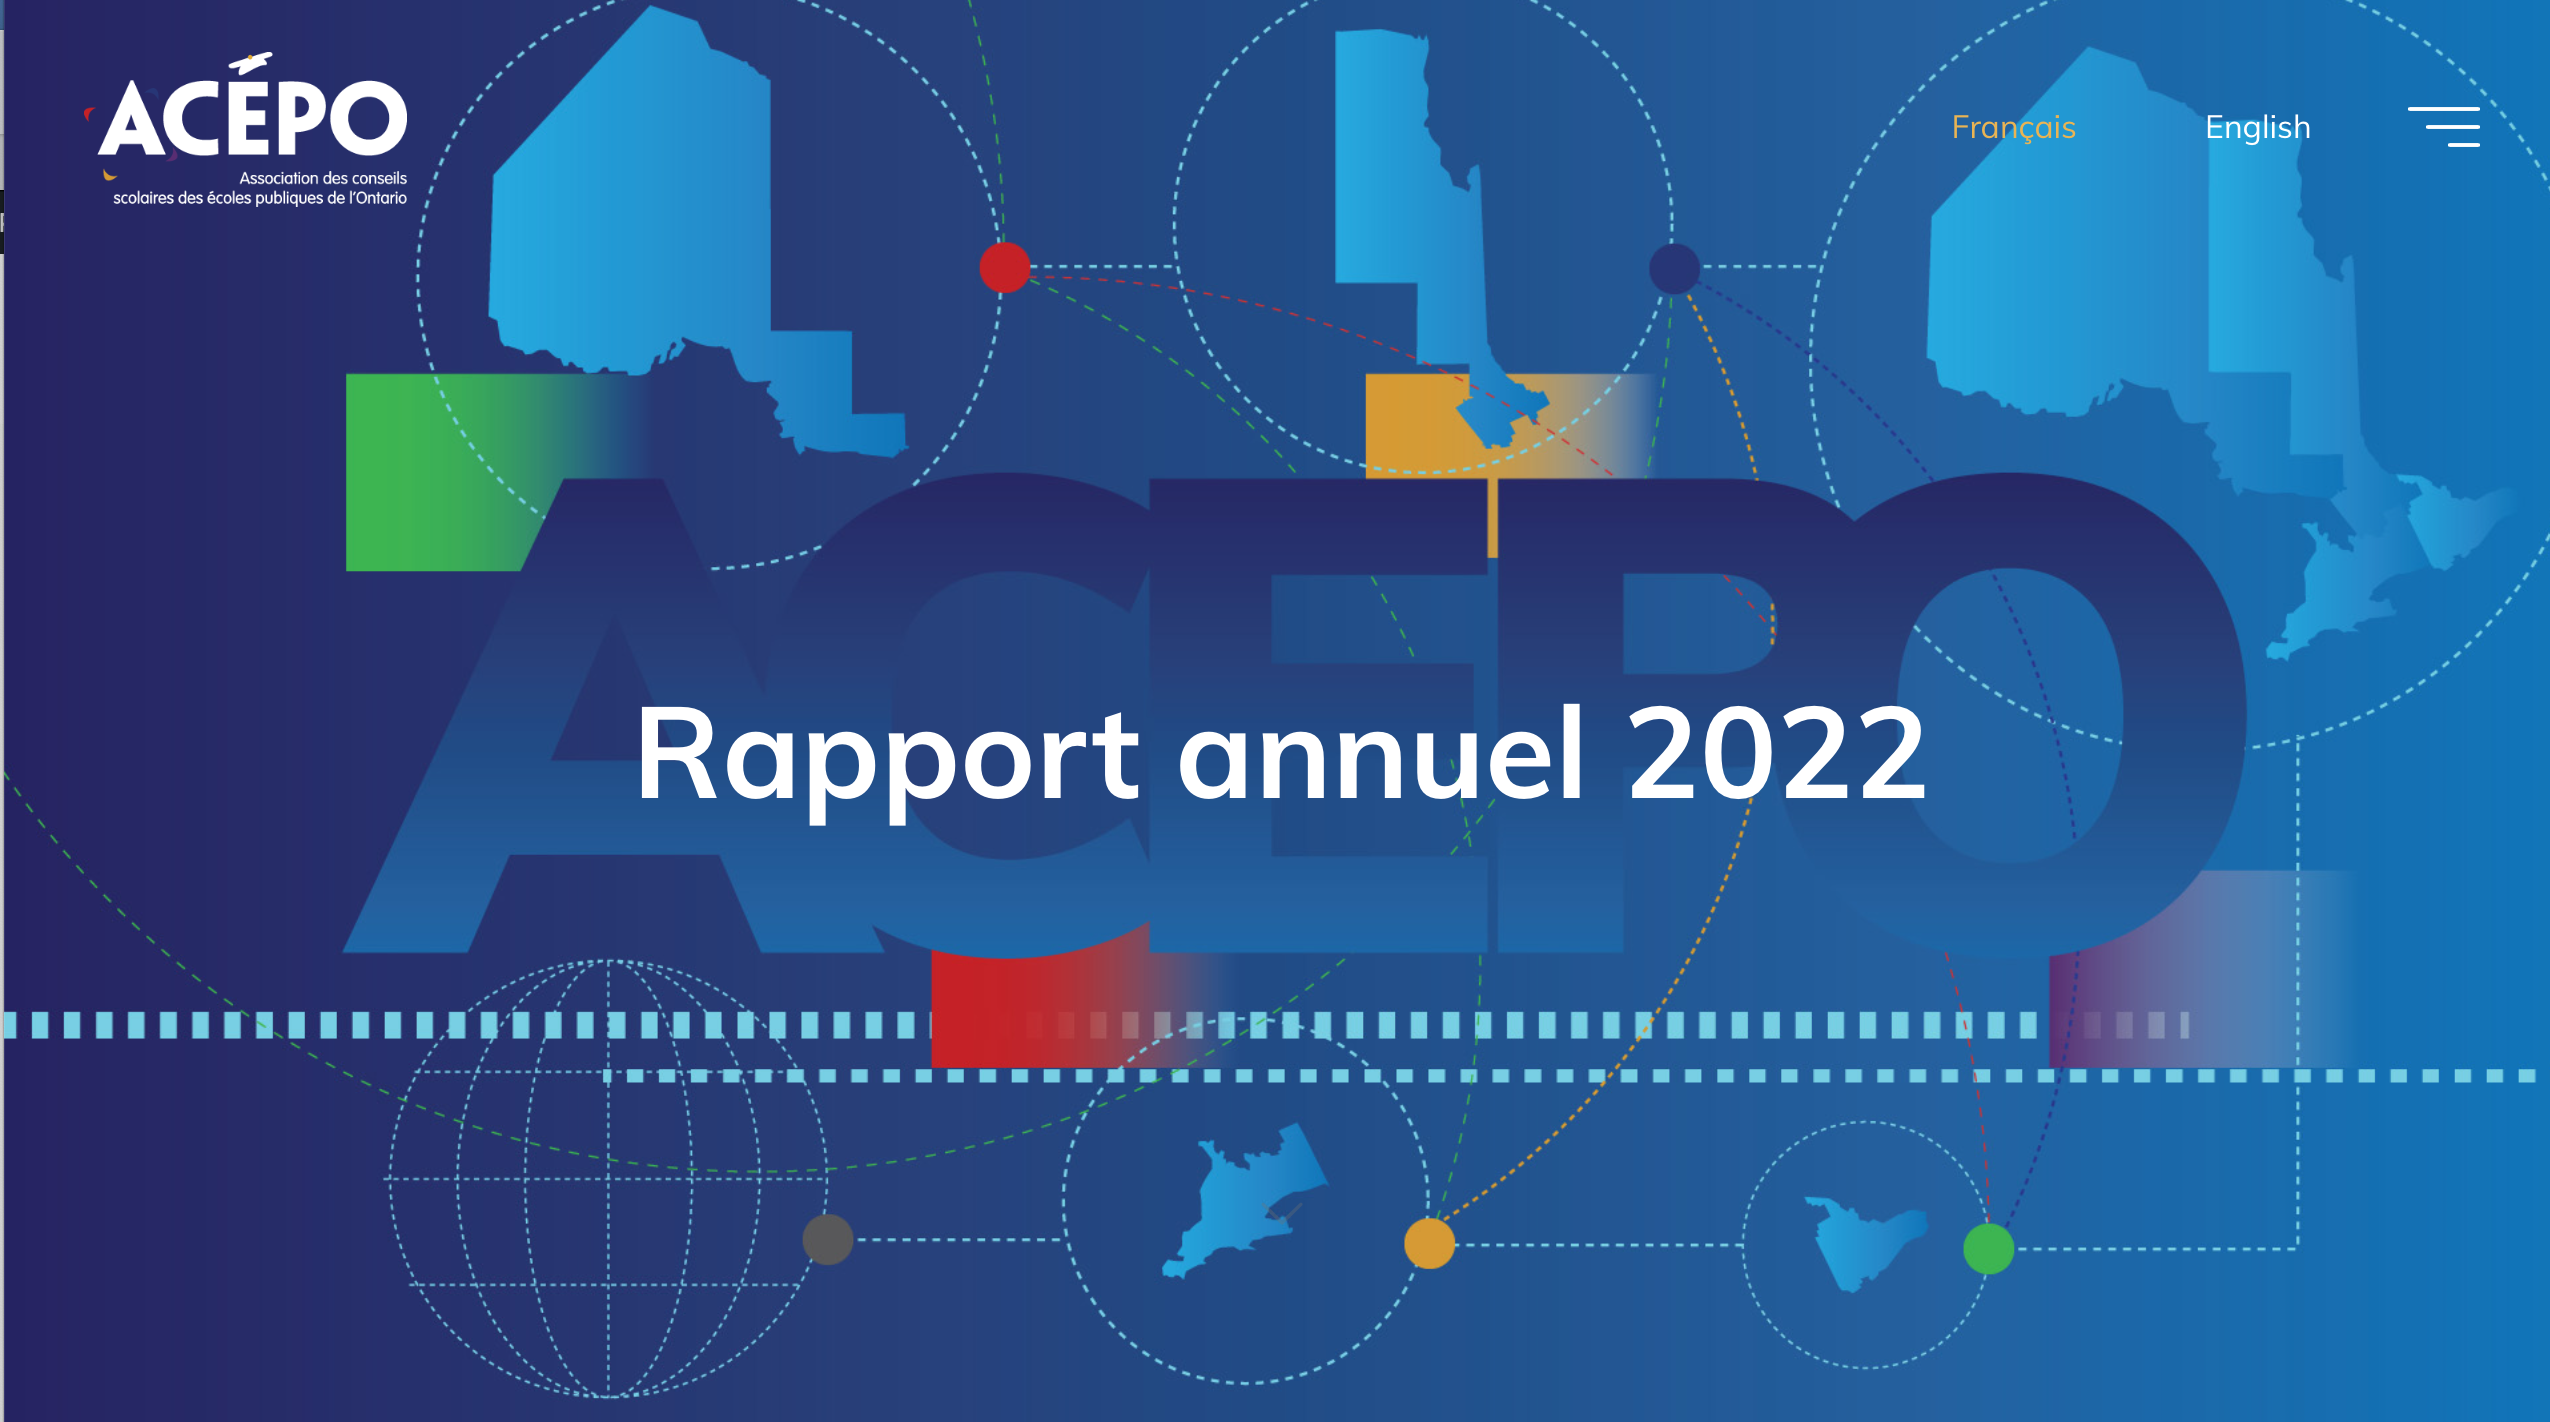 2022 ACÉPO Annual Report